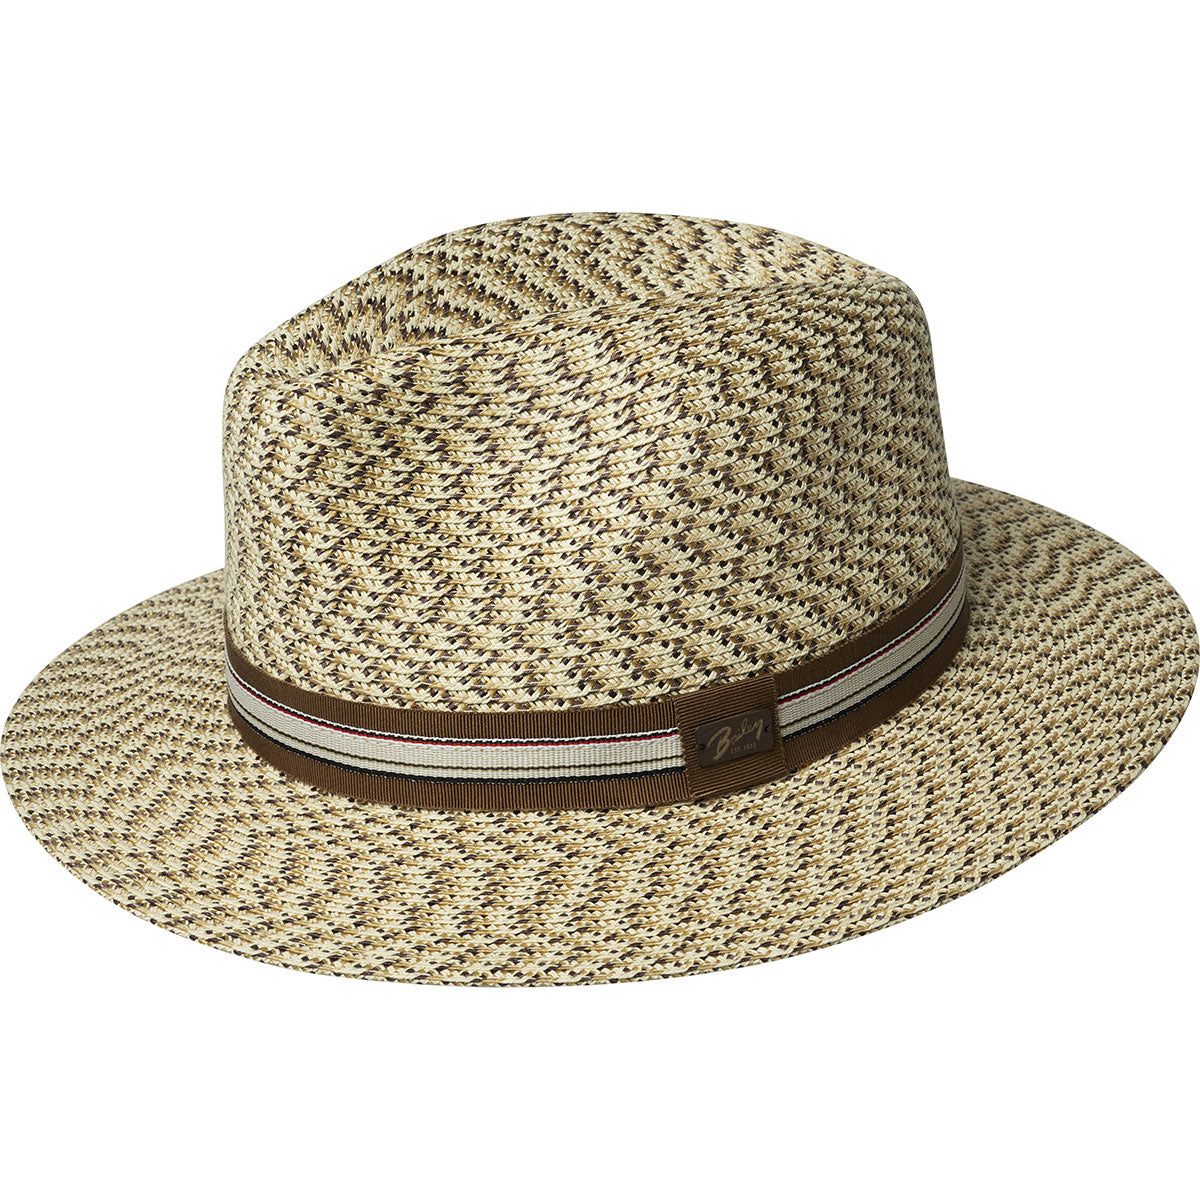 Bailey 'Westfield' Genuine Straw Fedora Hat